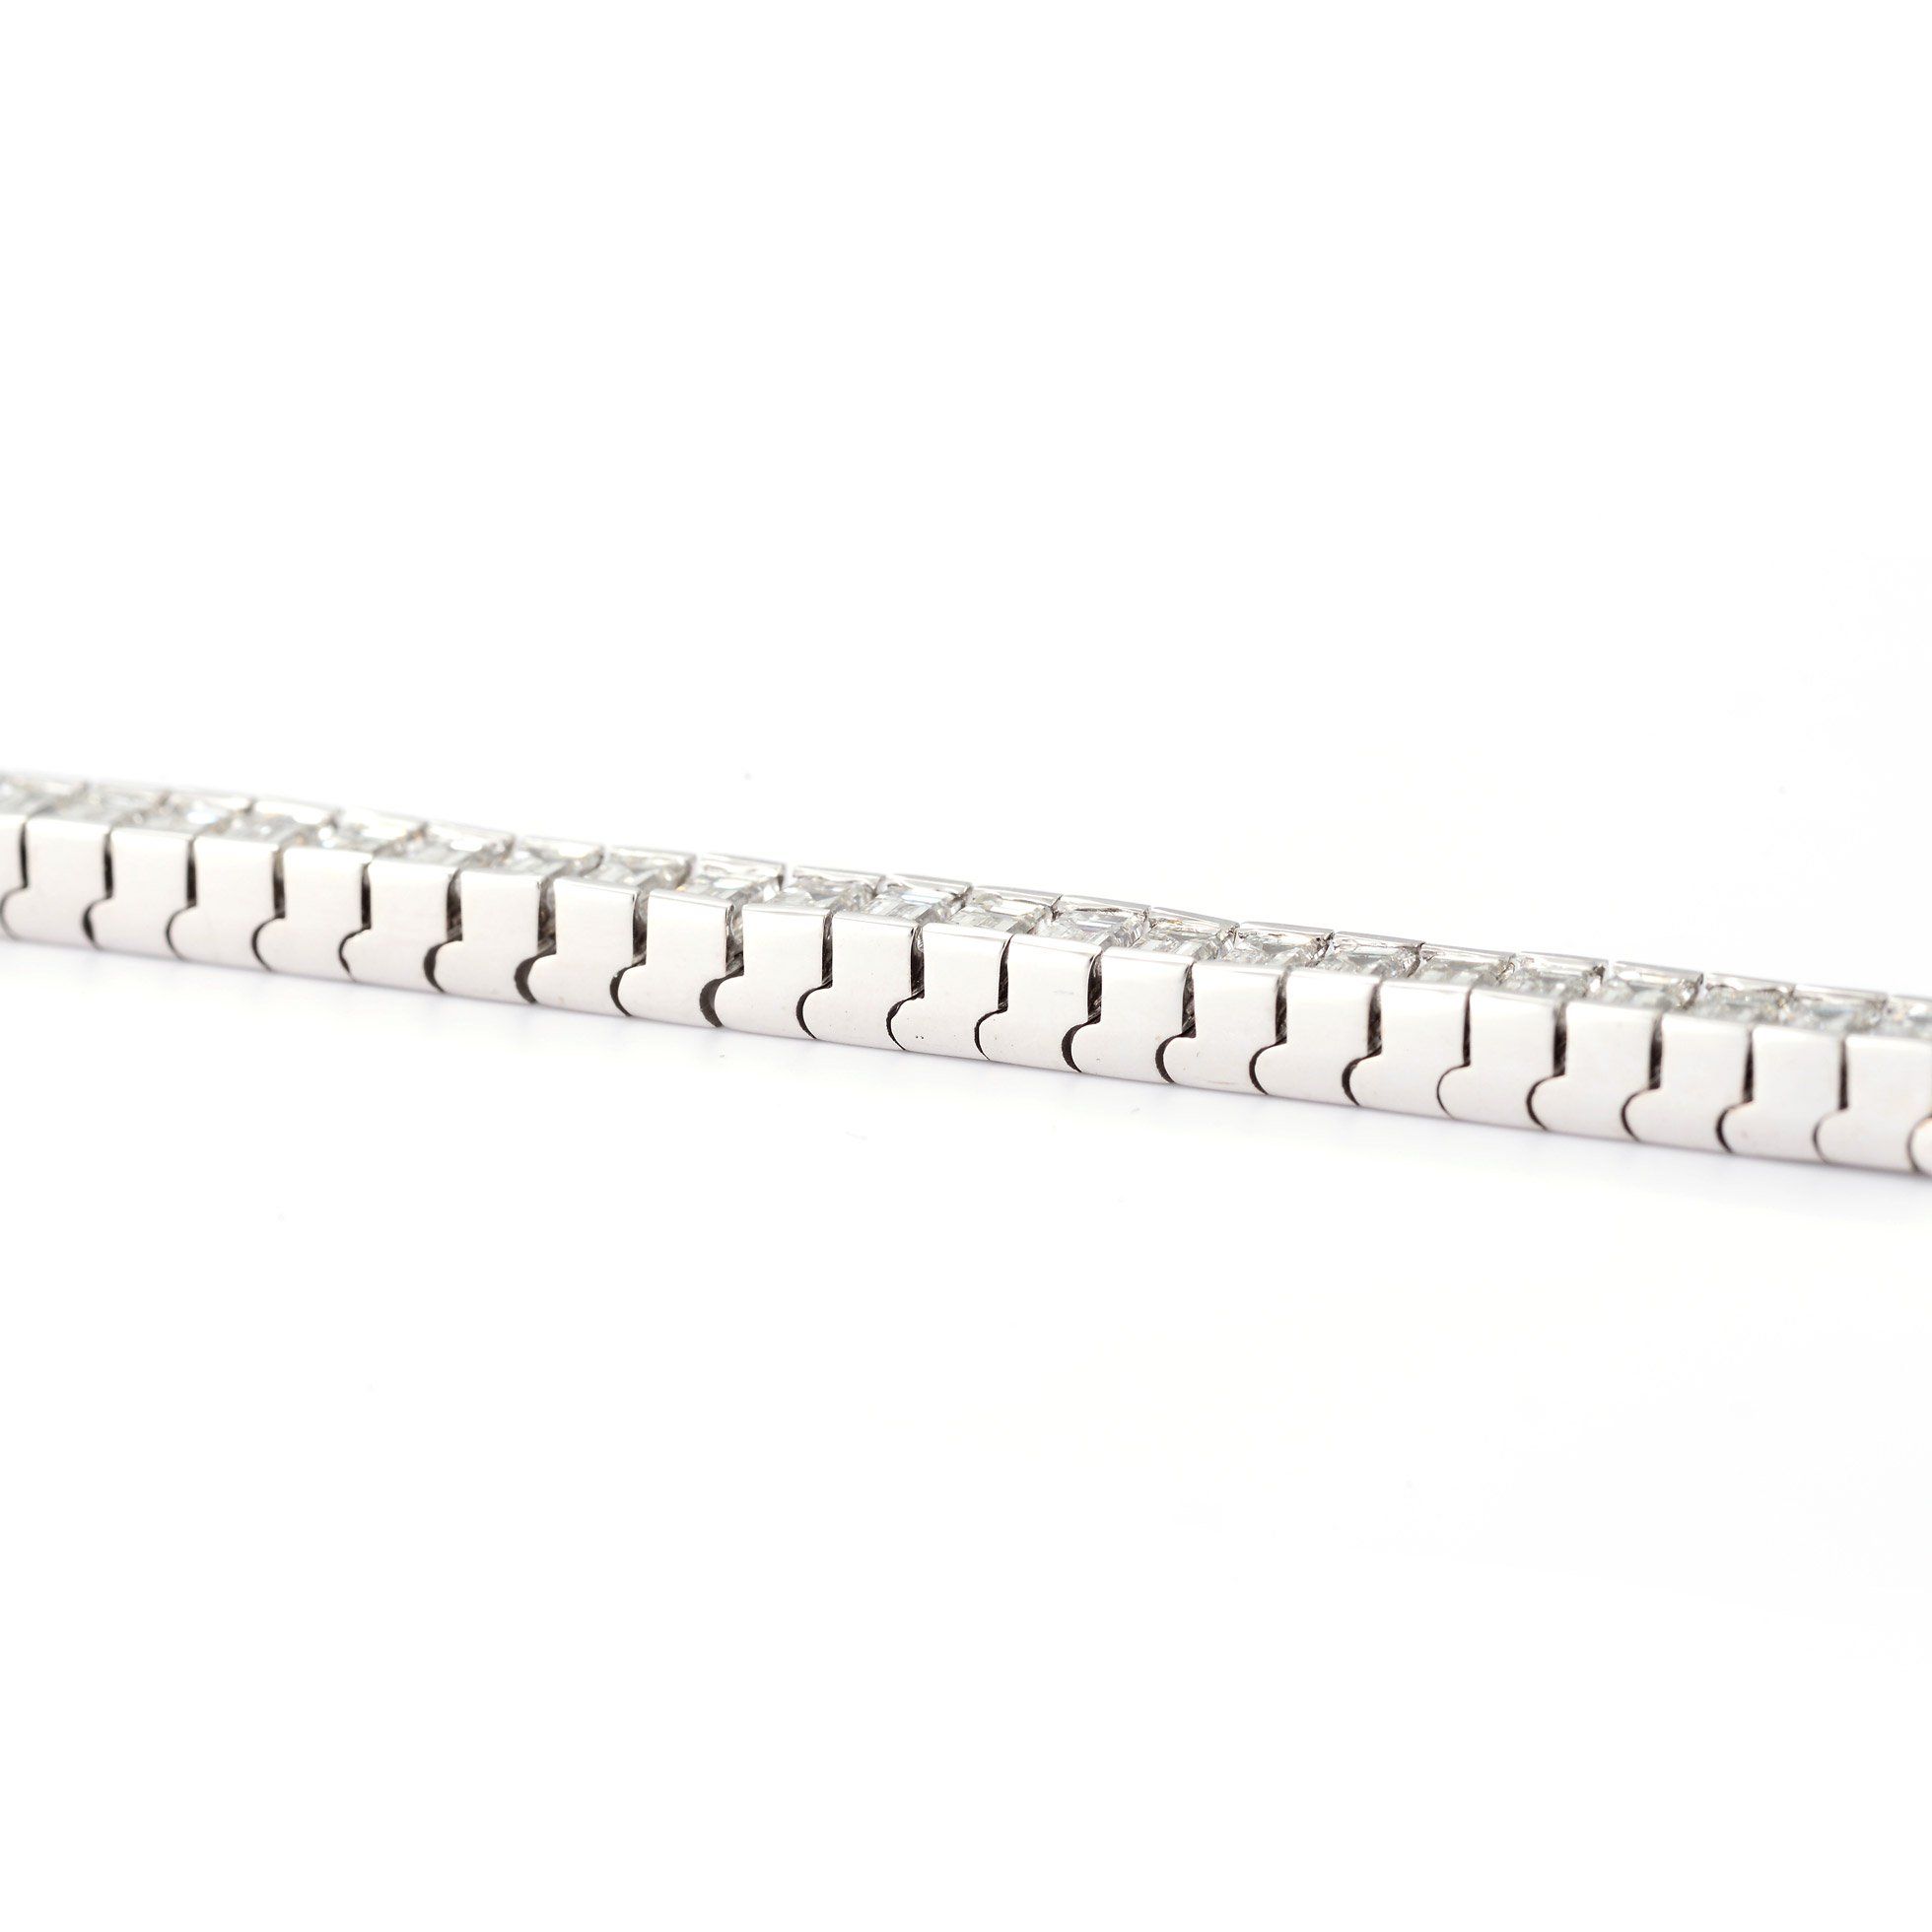  White Diamond Bracelet, 7.61 Ct. TW, Baguette shape